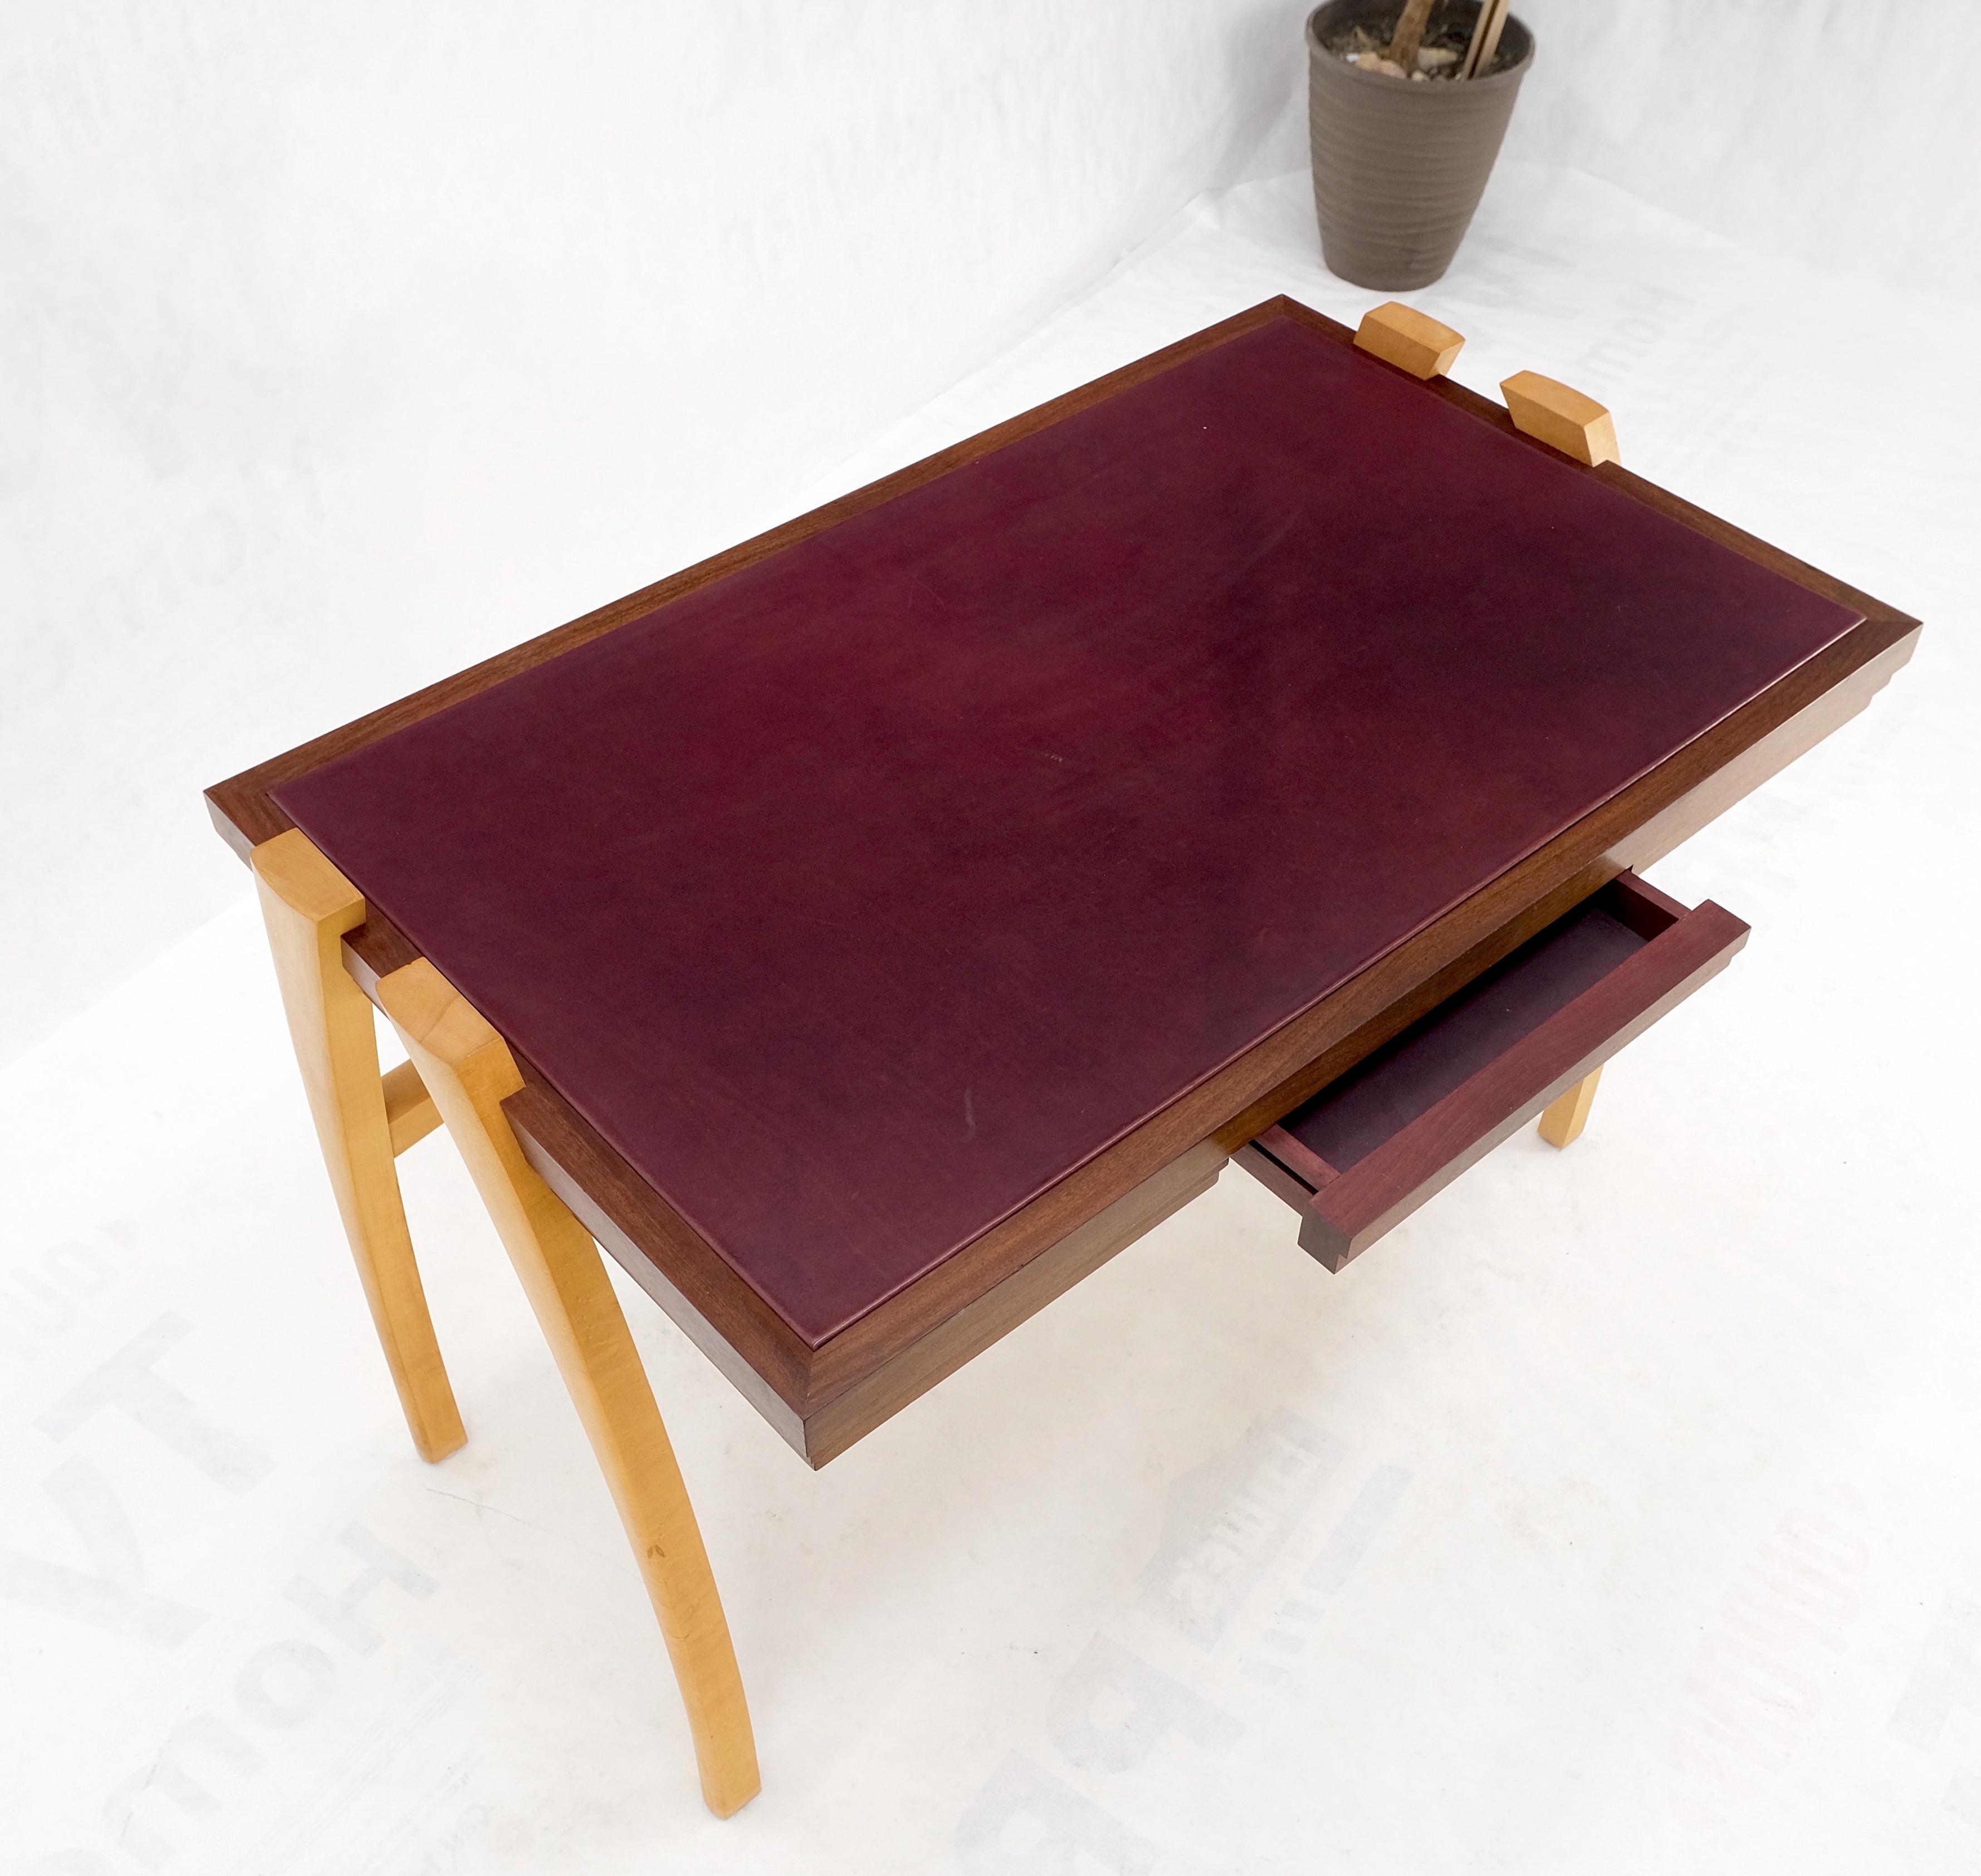 Low profile custom studio made one drawer Mid-Century Modernburgundy leather top blonde birch legs desk mint!